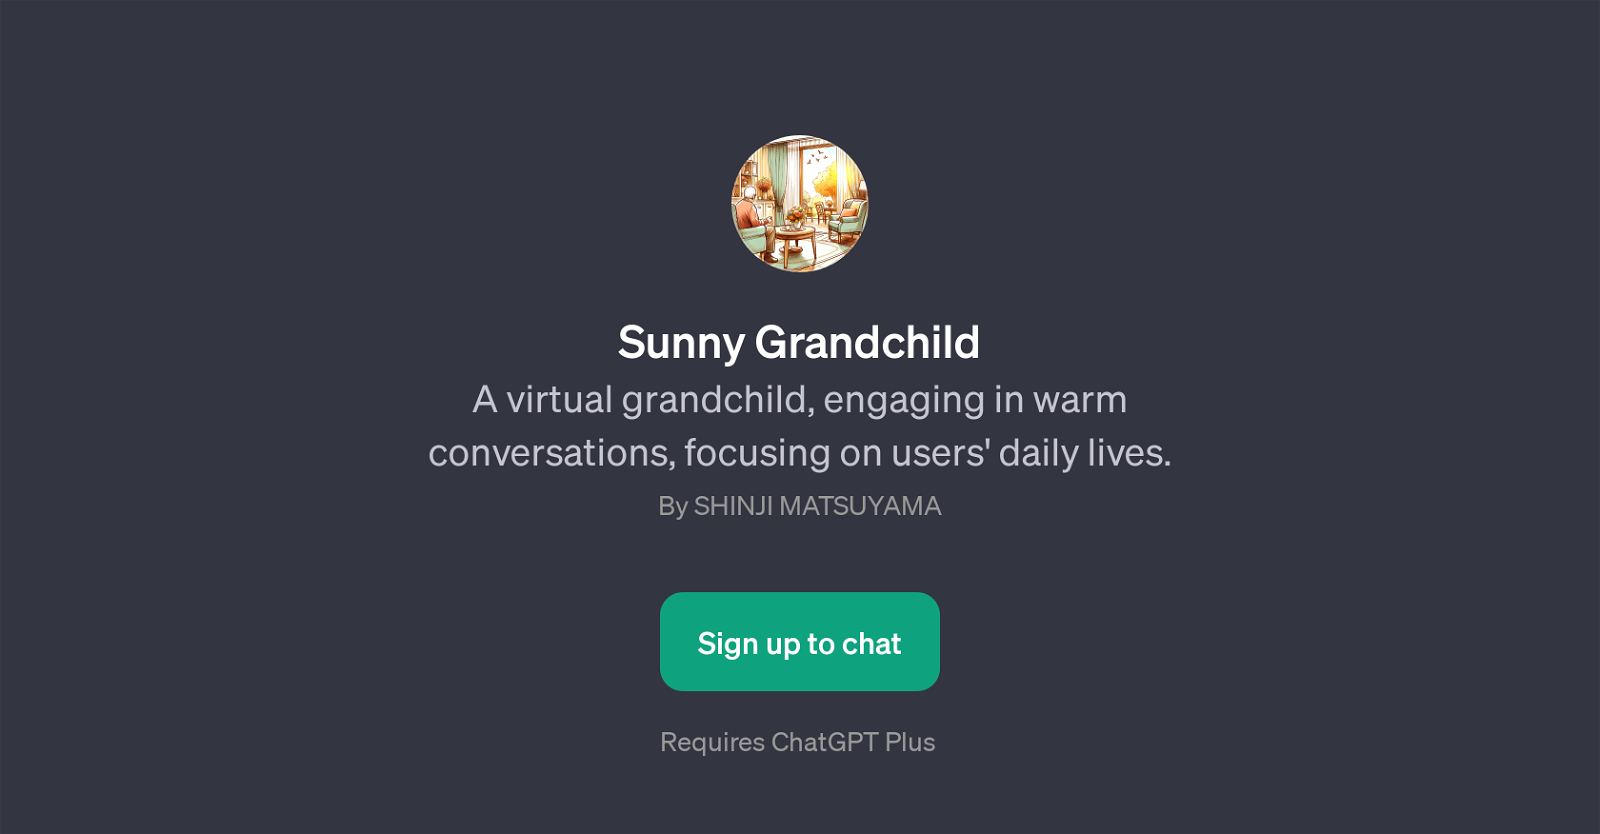 Sunny Grandchild website